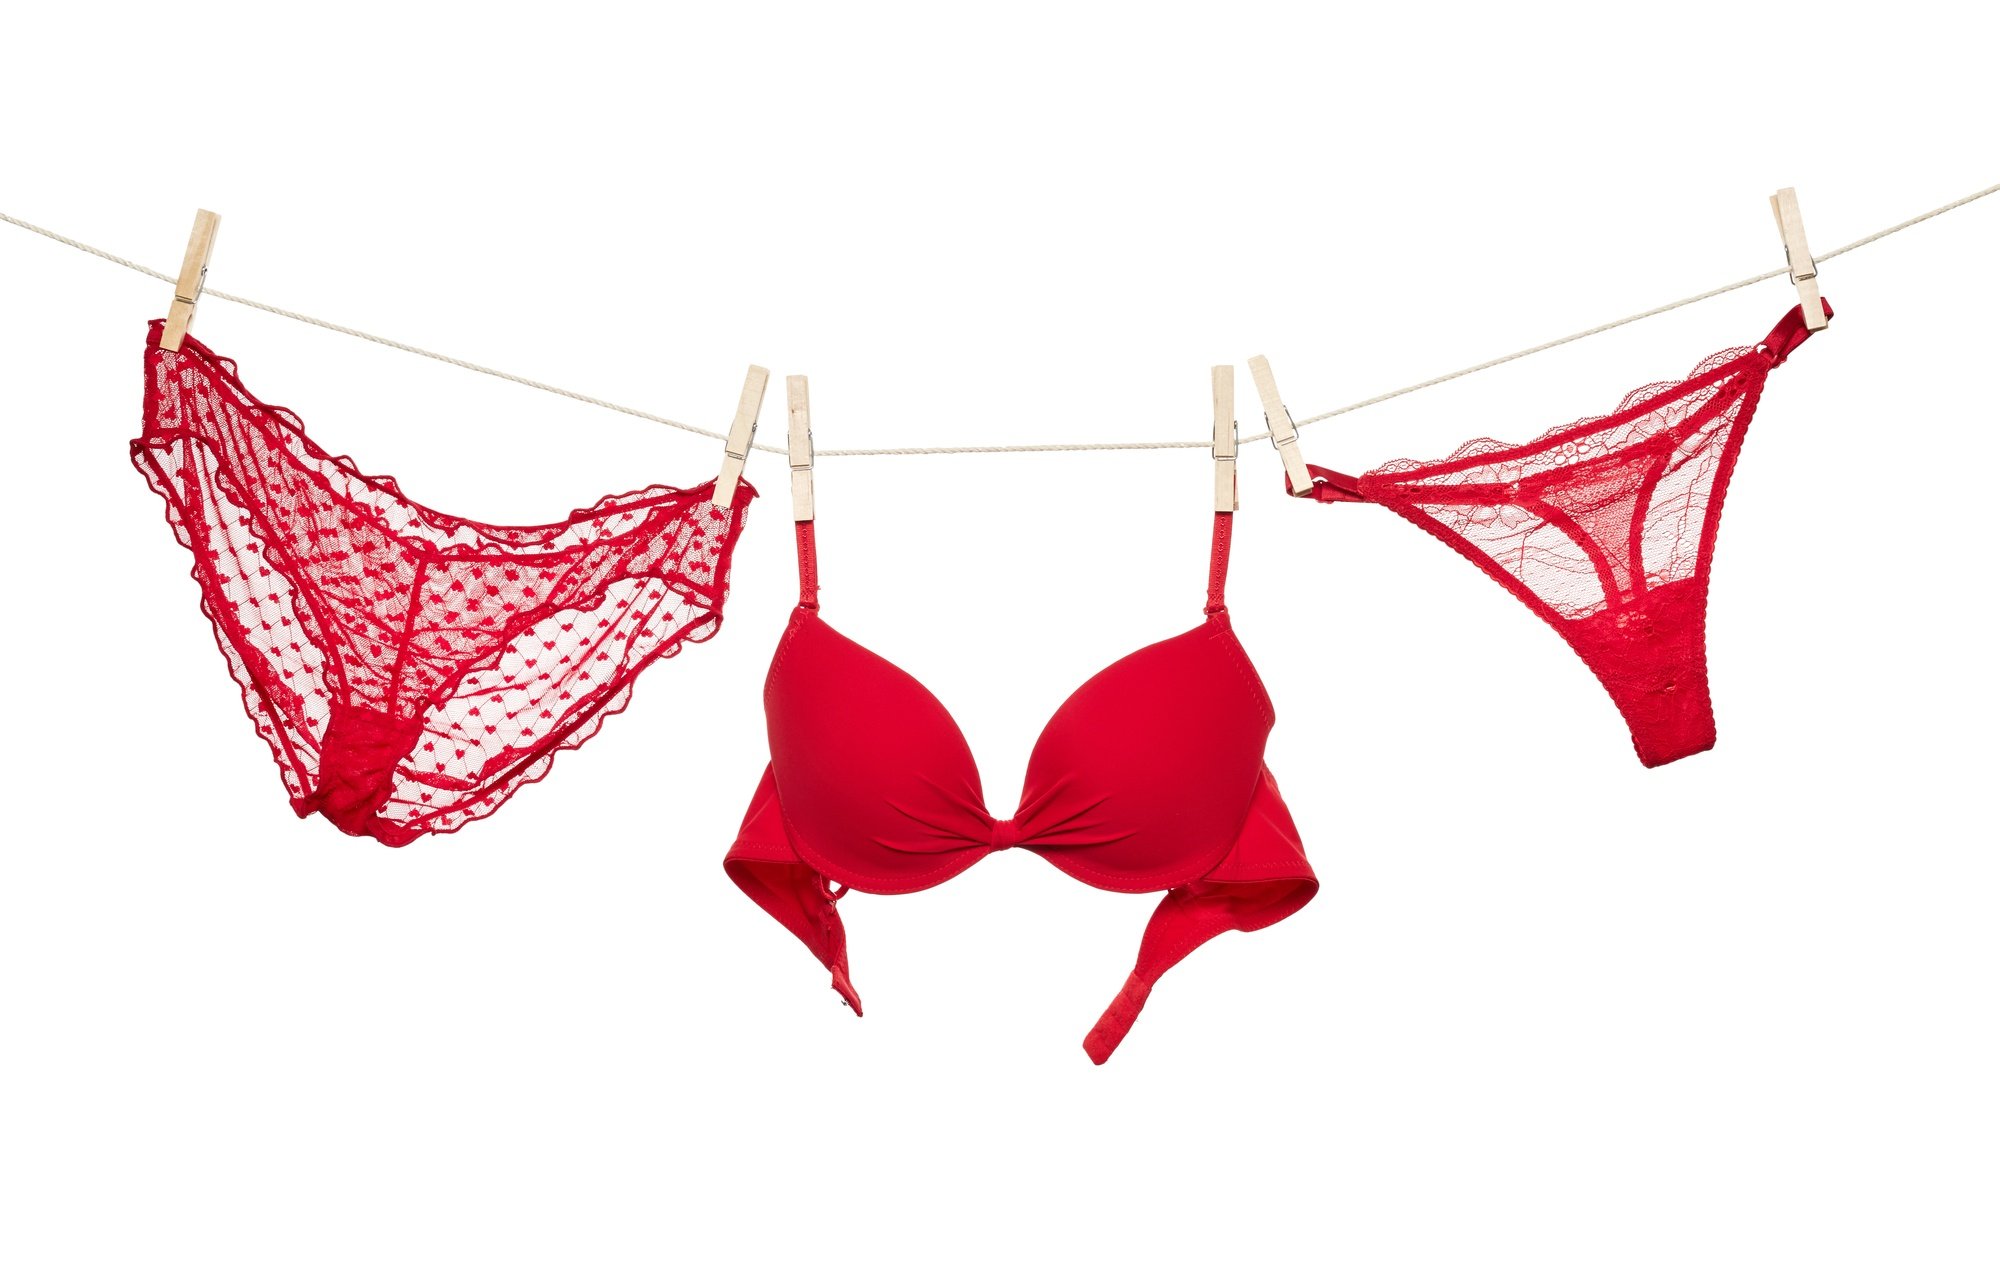 https://travelmamas.com/wp-content/uploads/2020/12/spain_underwear_new_year_red.jpg